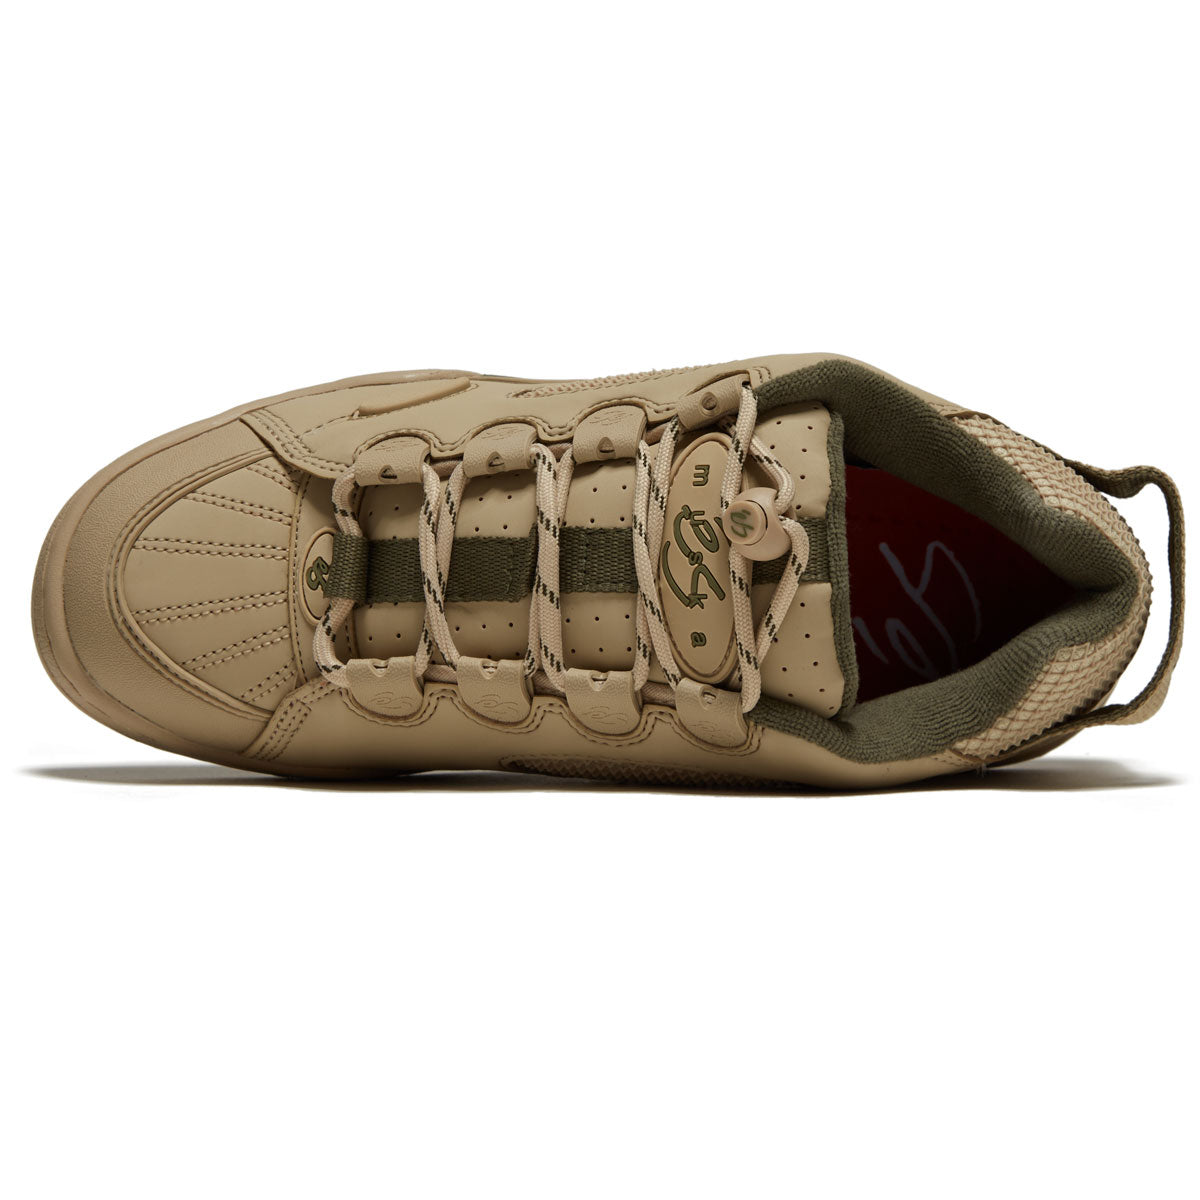 eS Muska Shoes - Tan/Green image 3